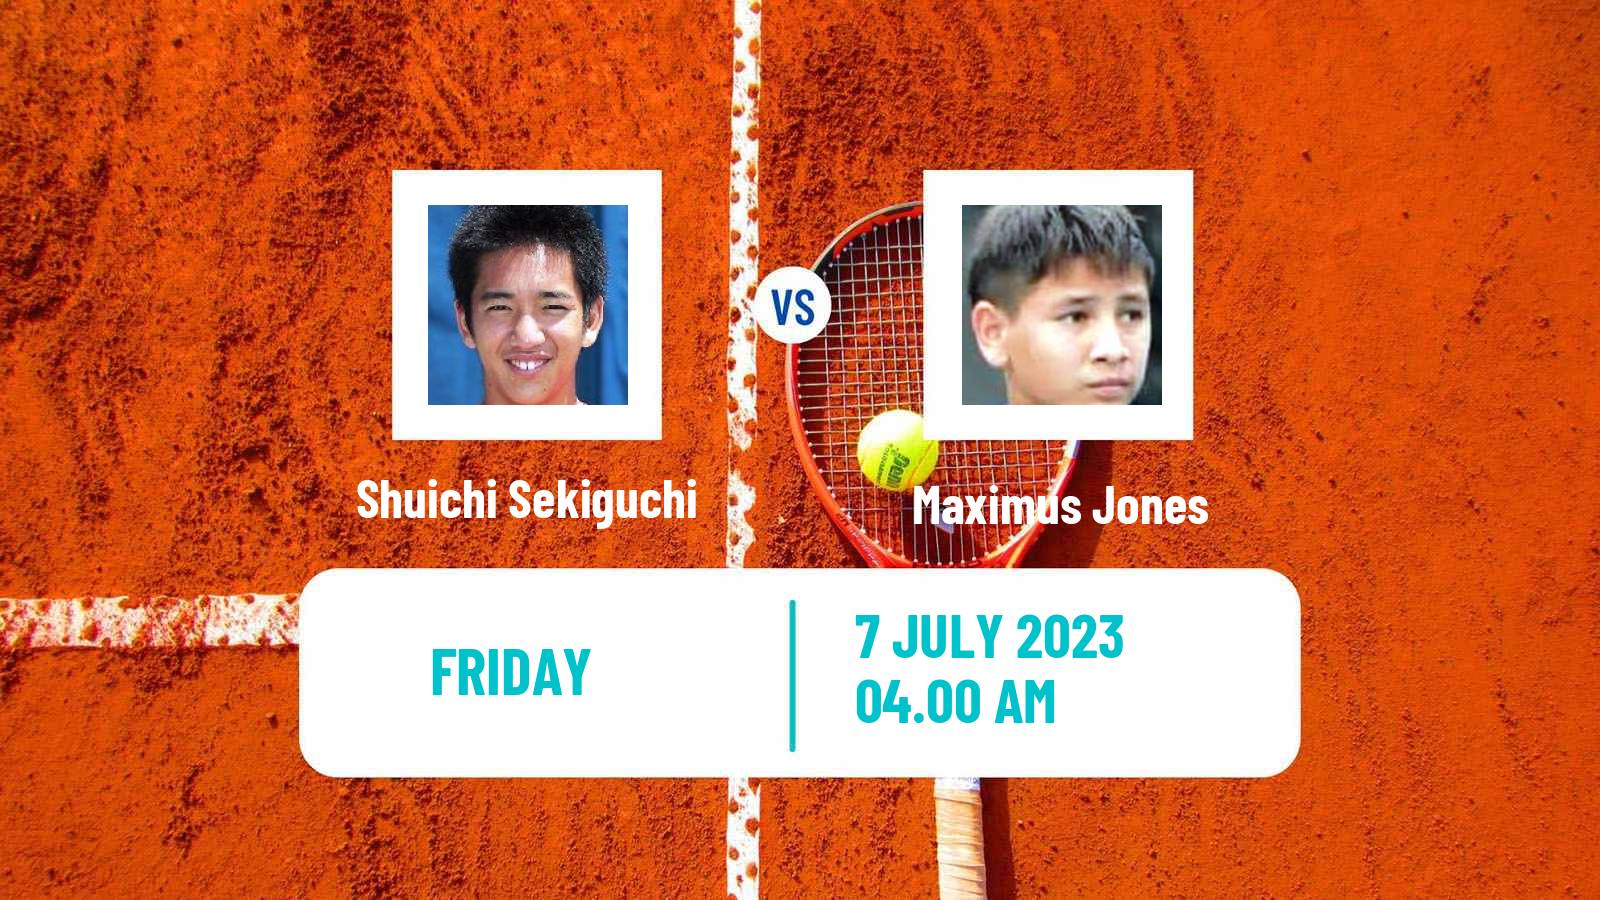 Tennis ITF M15 Nakhon Si Thammarat 3 Men Shuichi Sekiguchi - Maximus Jones